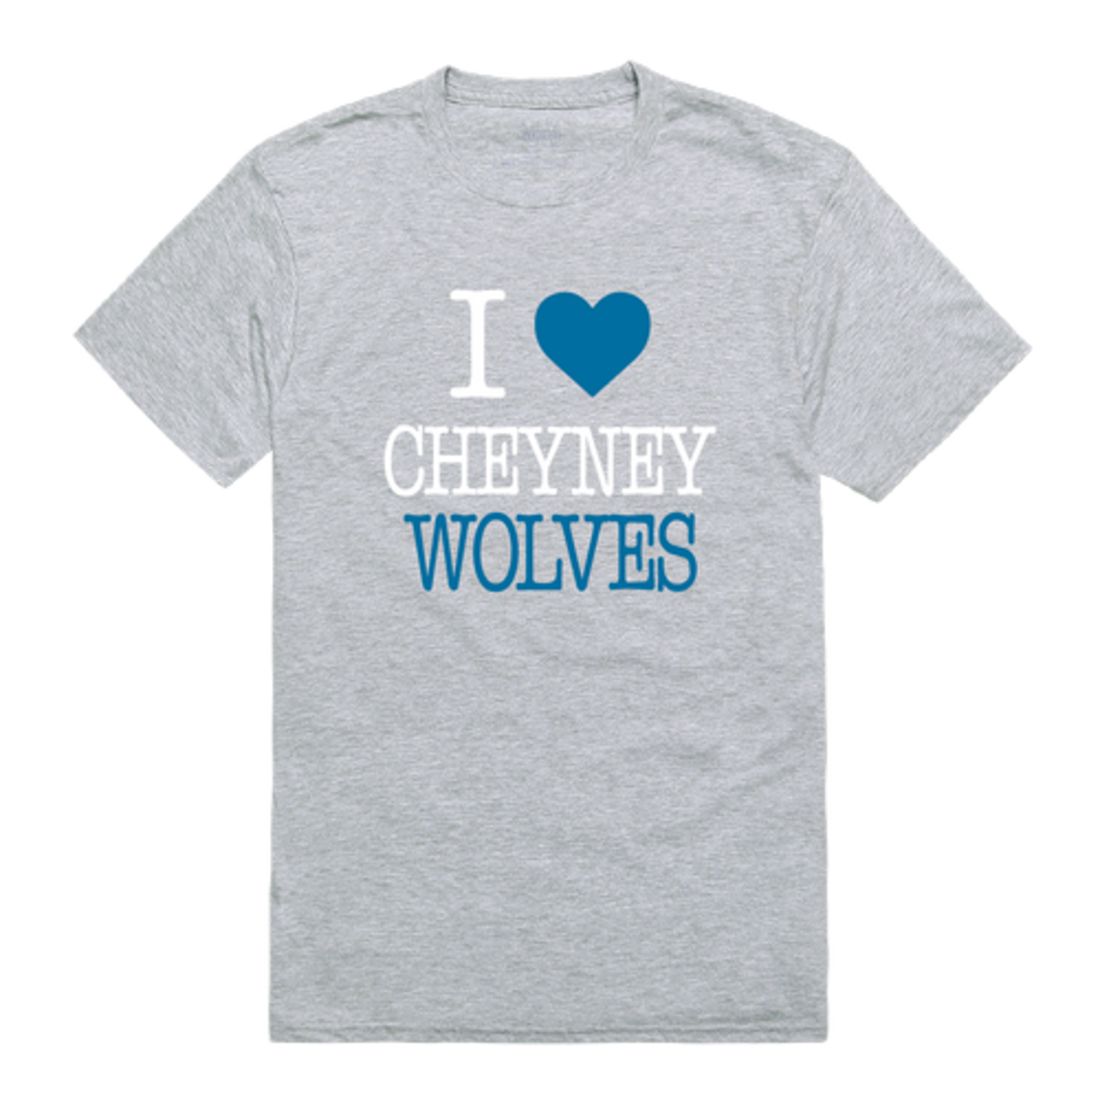 I Love Cheyney University of Pennsylvania Wolves T-Shirt Tee